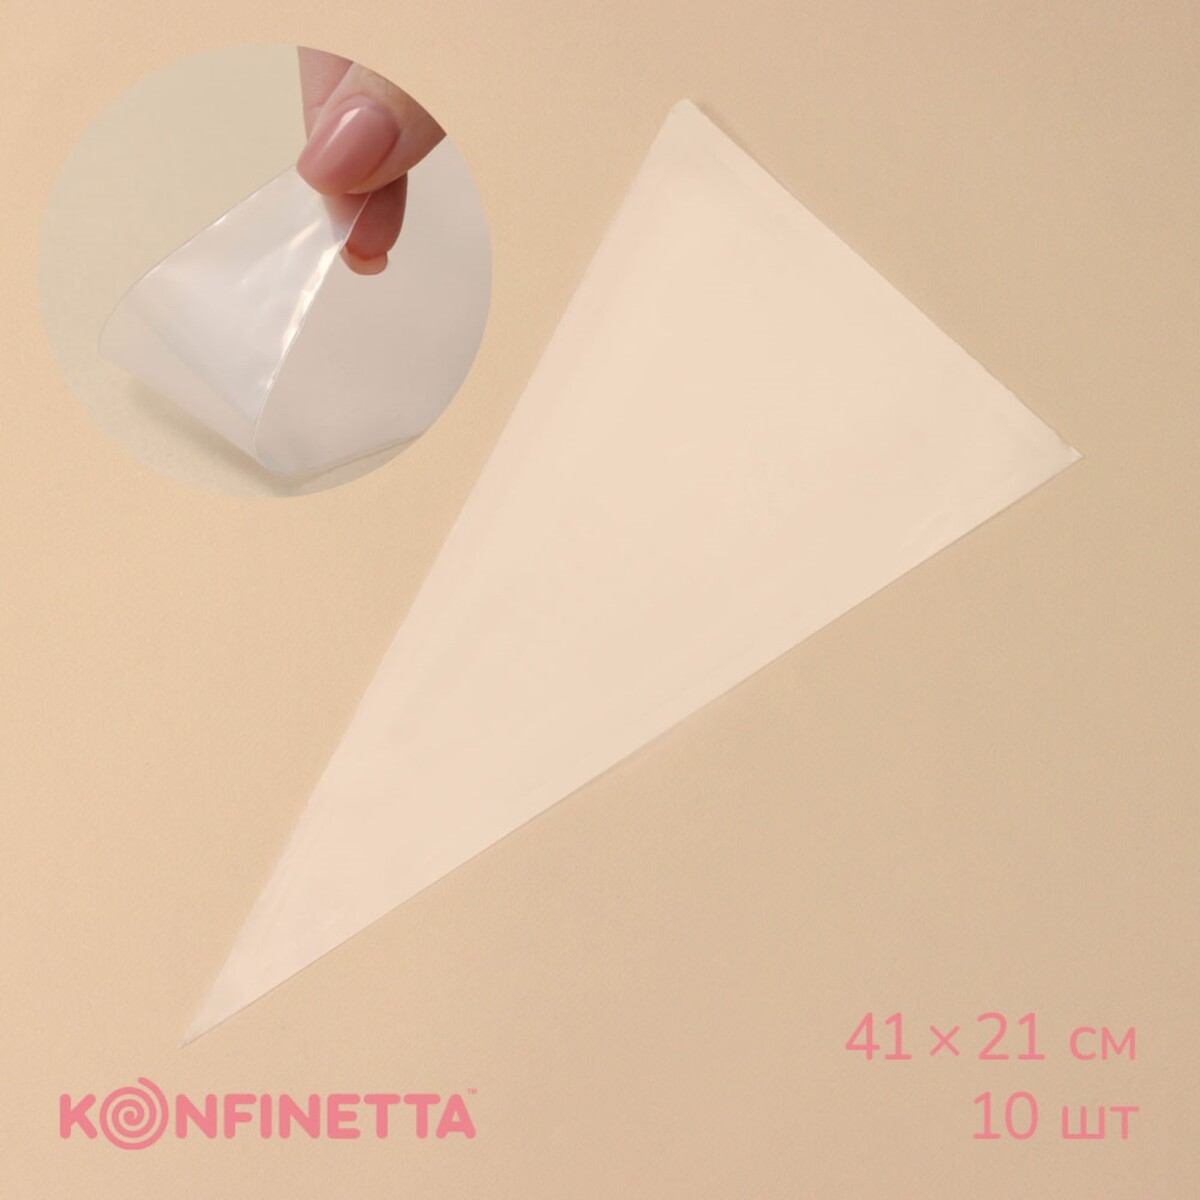 Кондитерские мешки konfinetta, 41×21 см (размер l), 10 шт кондитерский мешок konfinetta 35×21 см хлопок